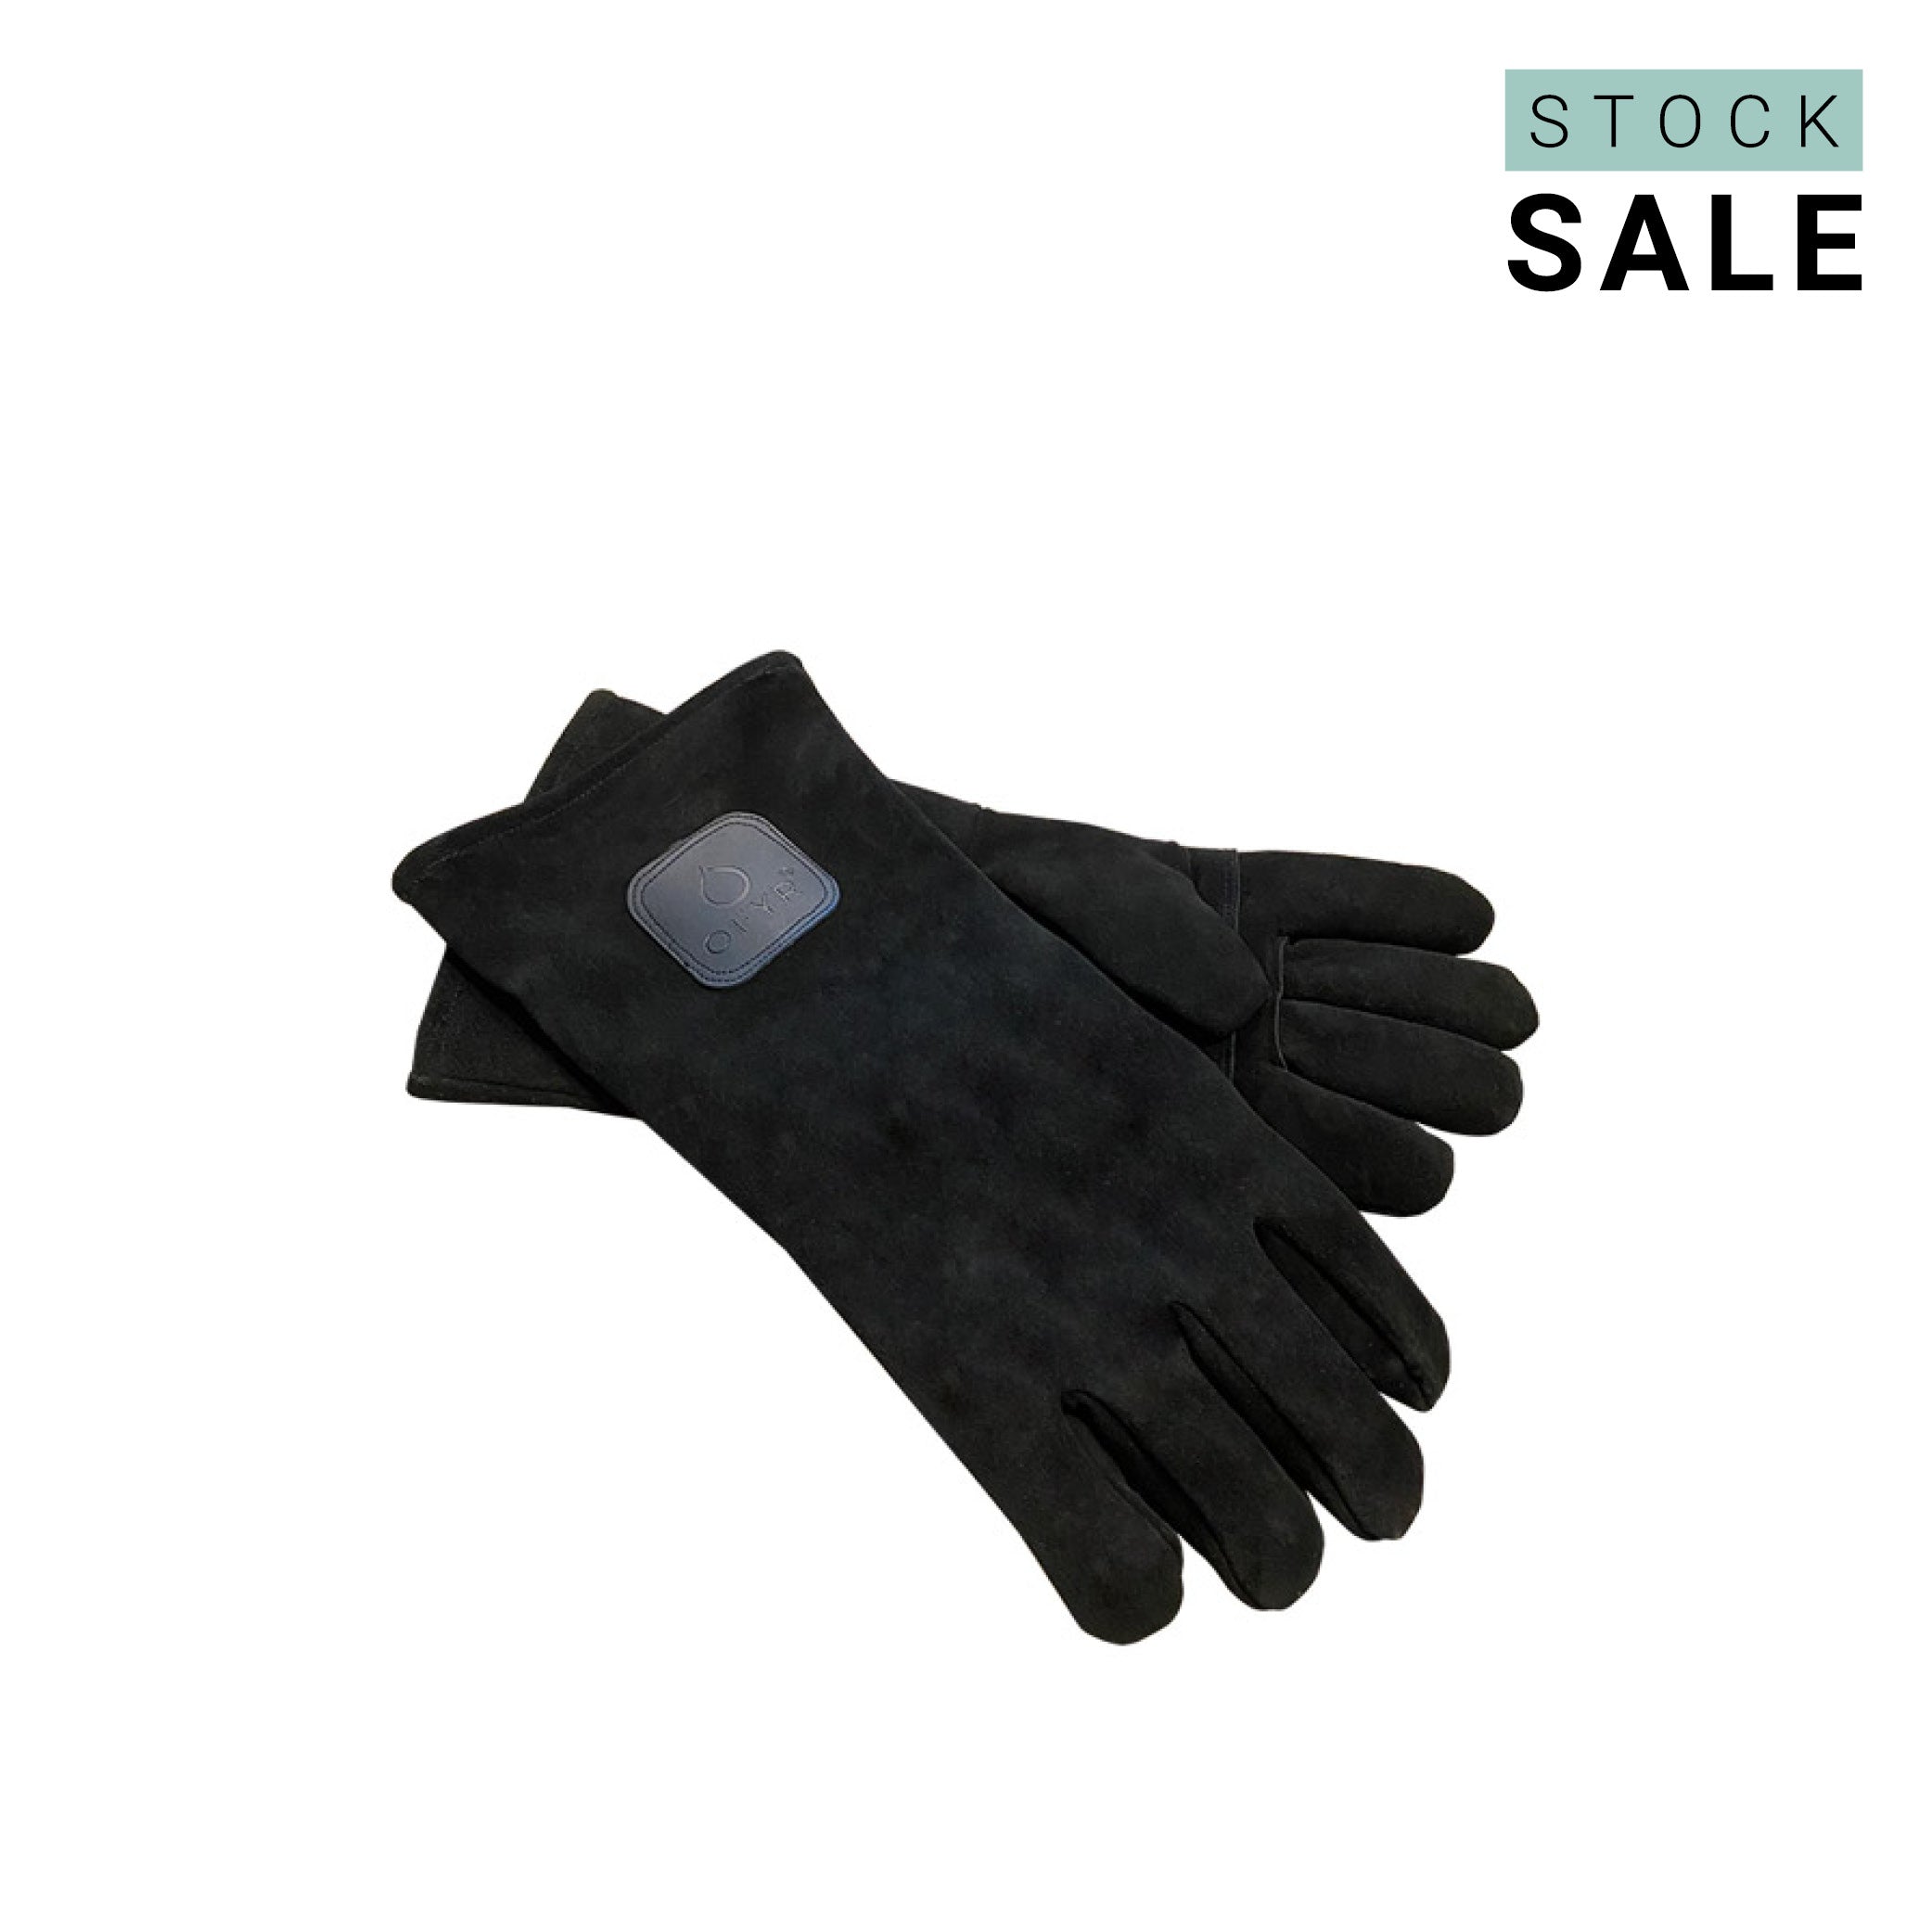 StockSale Handschuhe